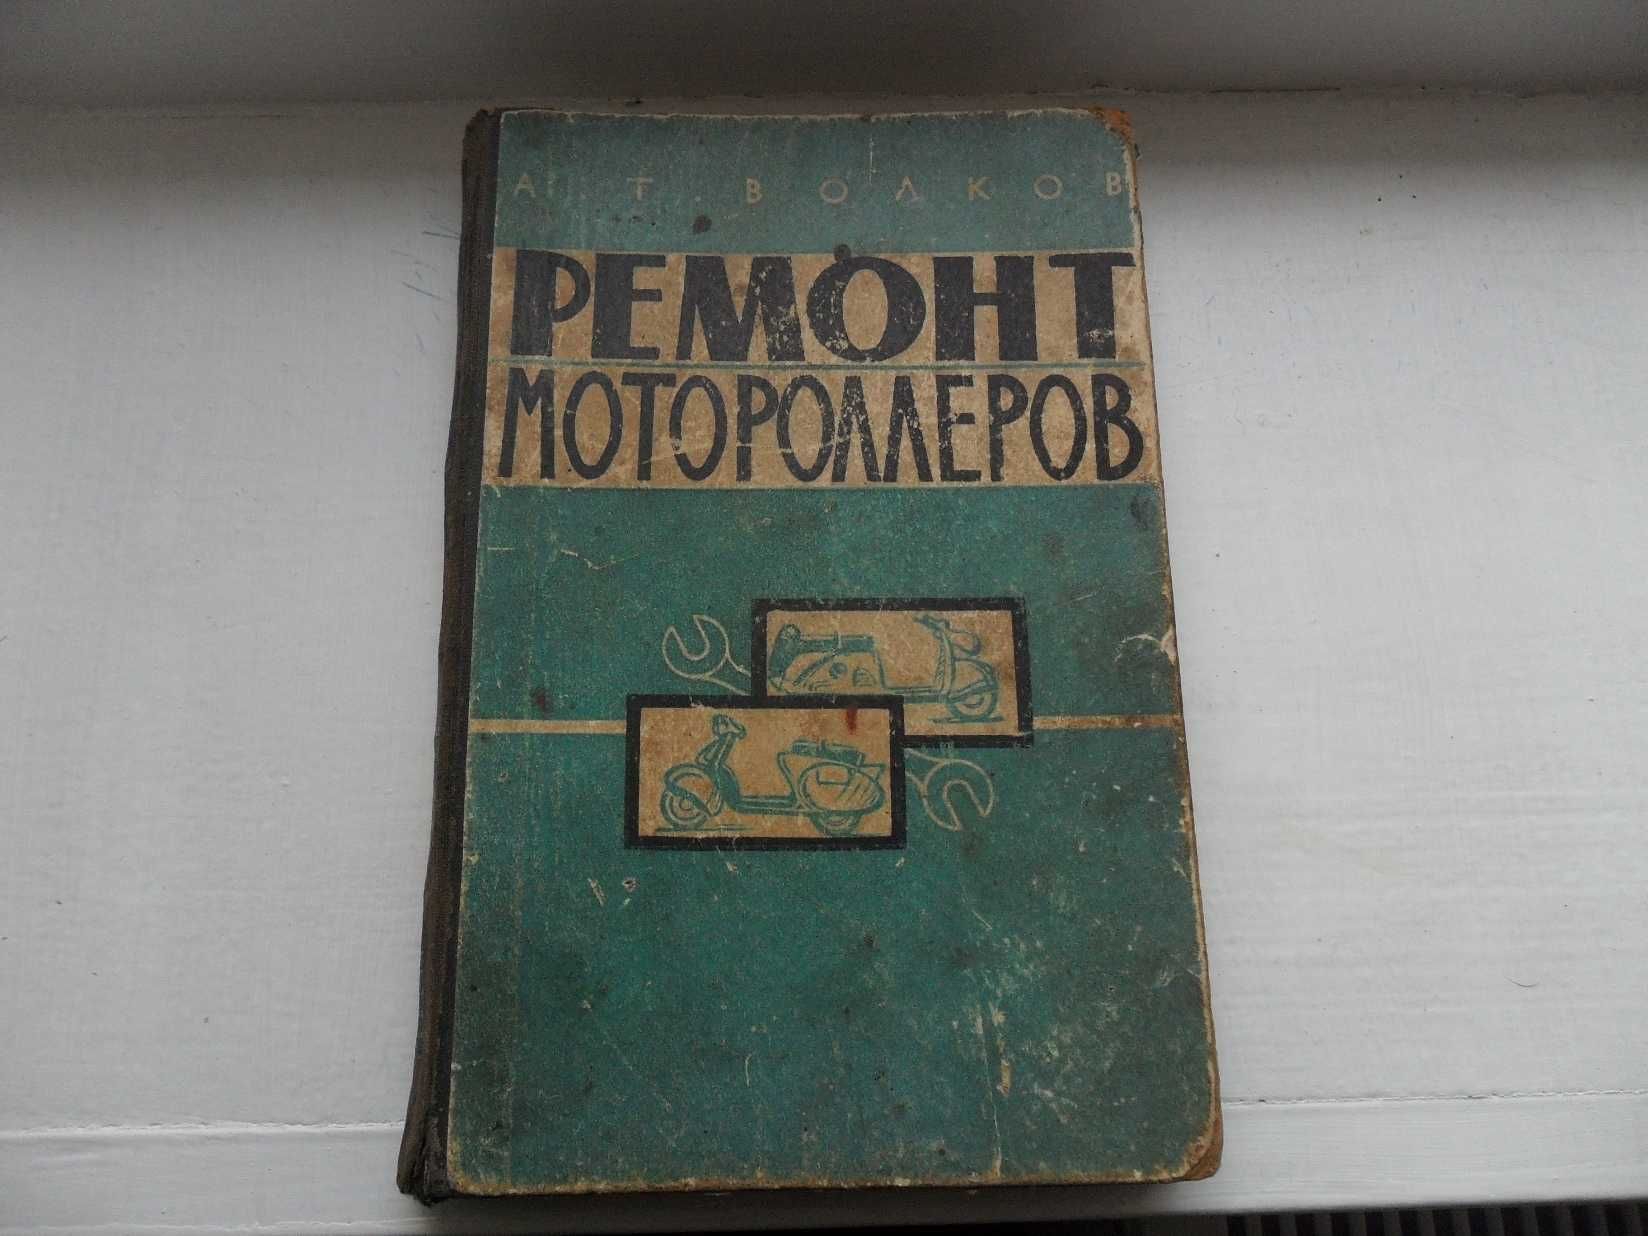 Книга "Ремонт мотороллеров" автора А.Т.Волкова,издания Москва 1961 г.